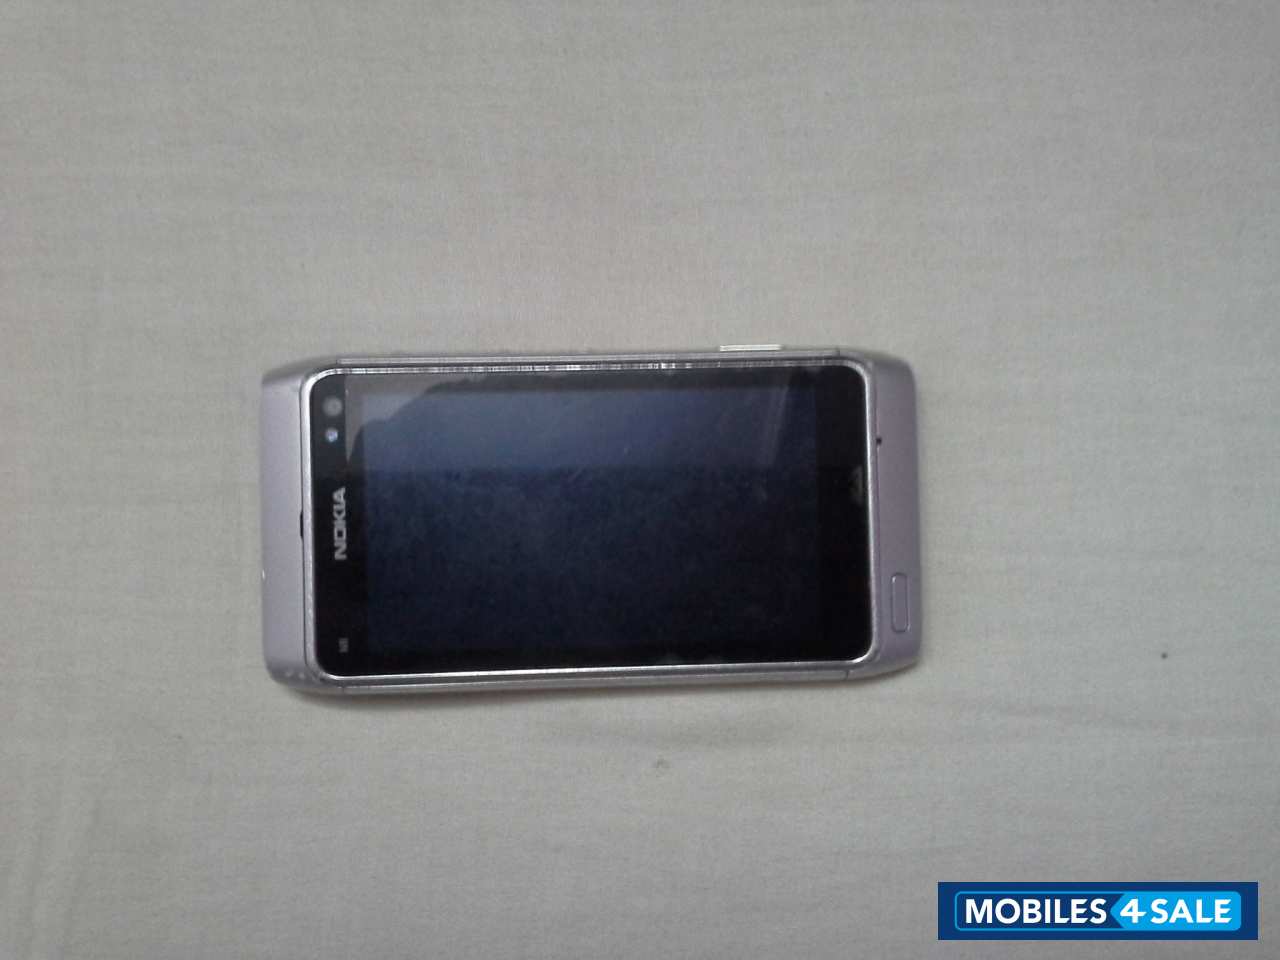 Silver Metalic Nokia N8